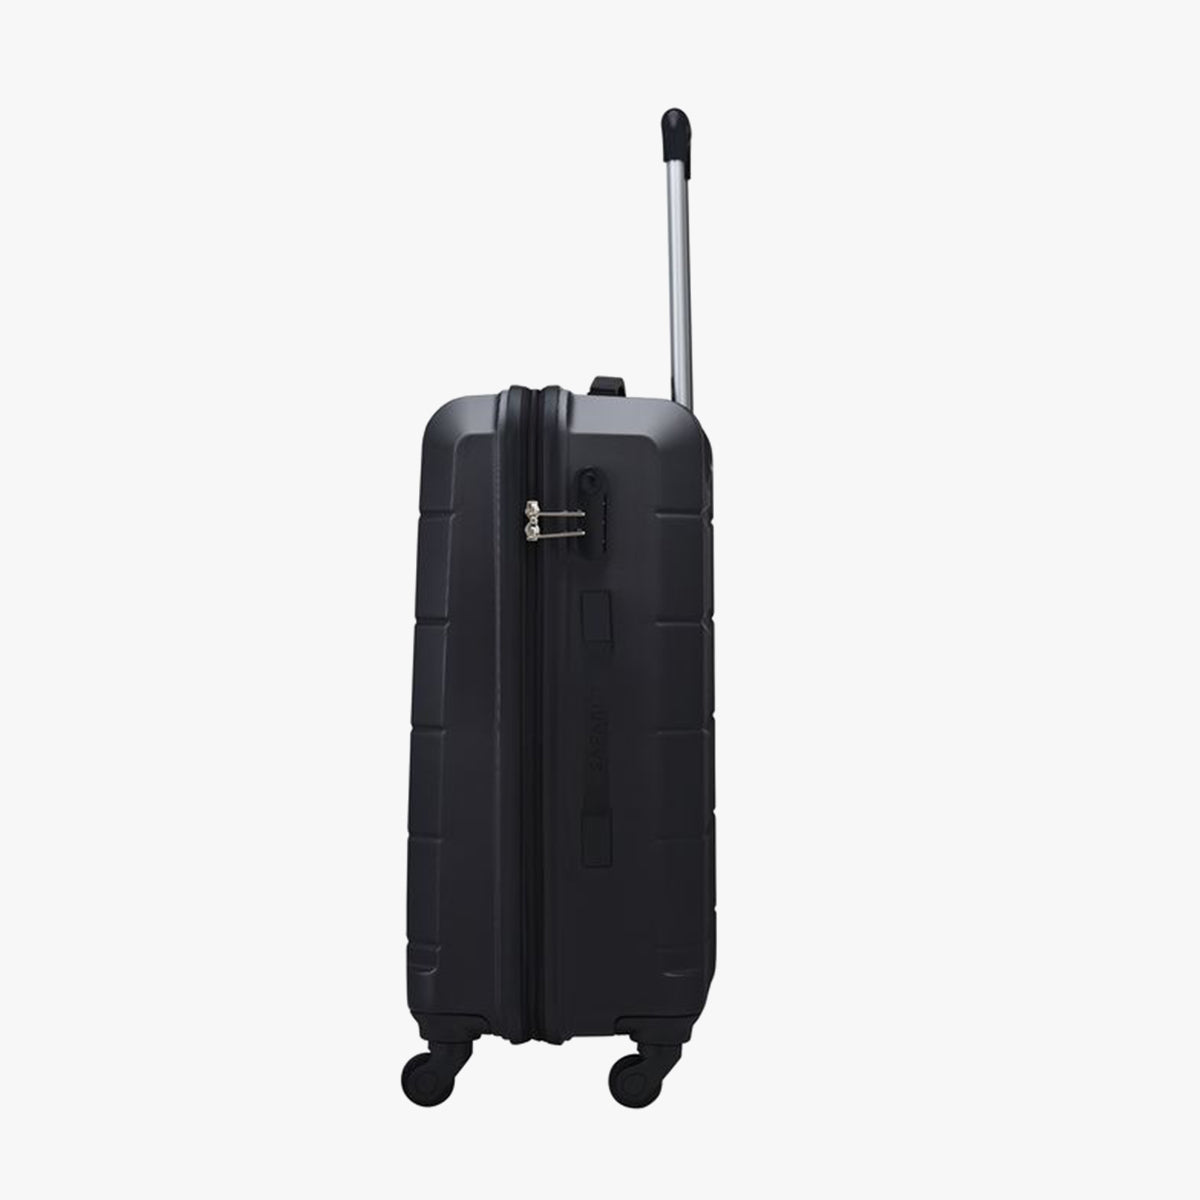 Regloss Antiscratch Hard Luggage Combo Set (Cabin and Medium) - Black